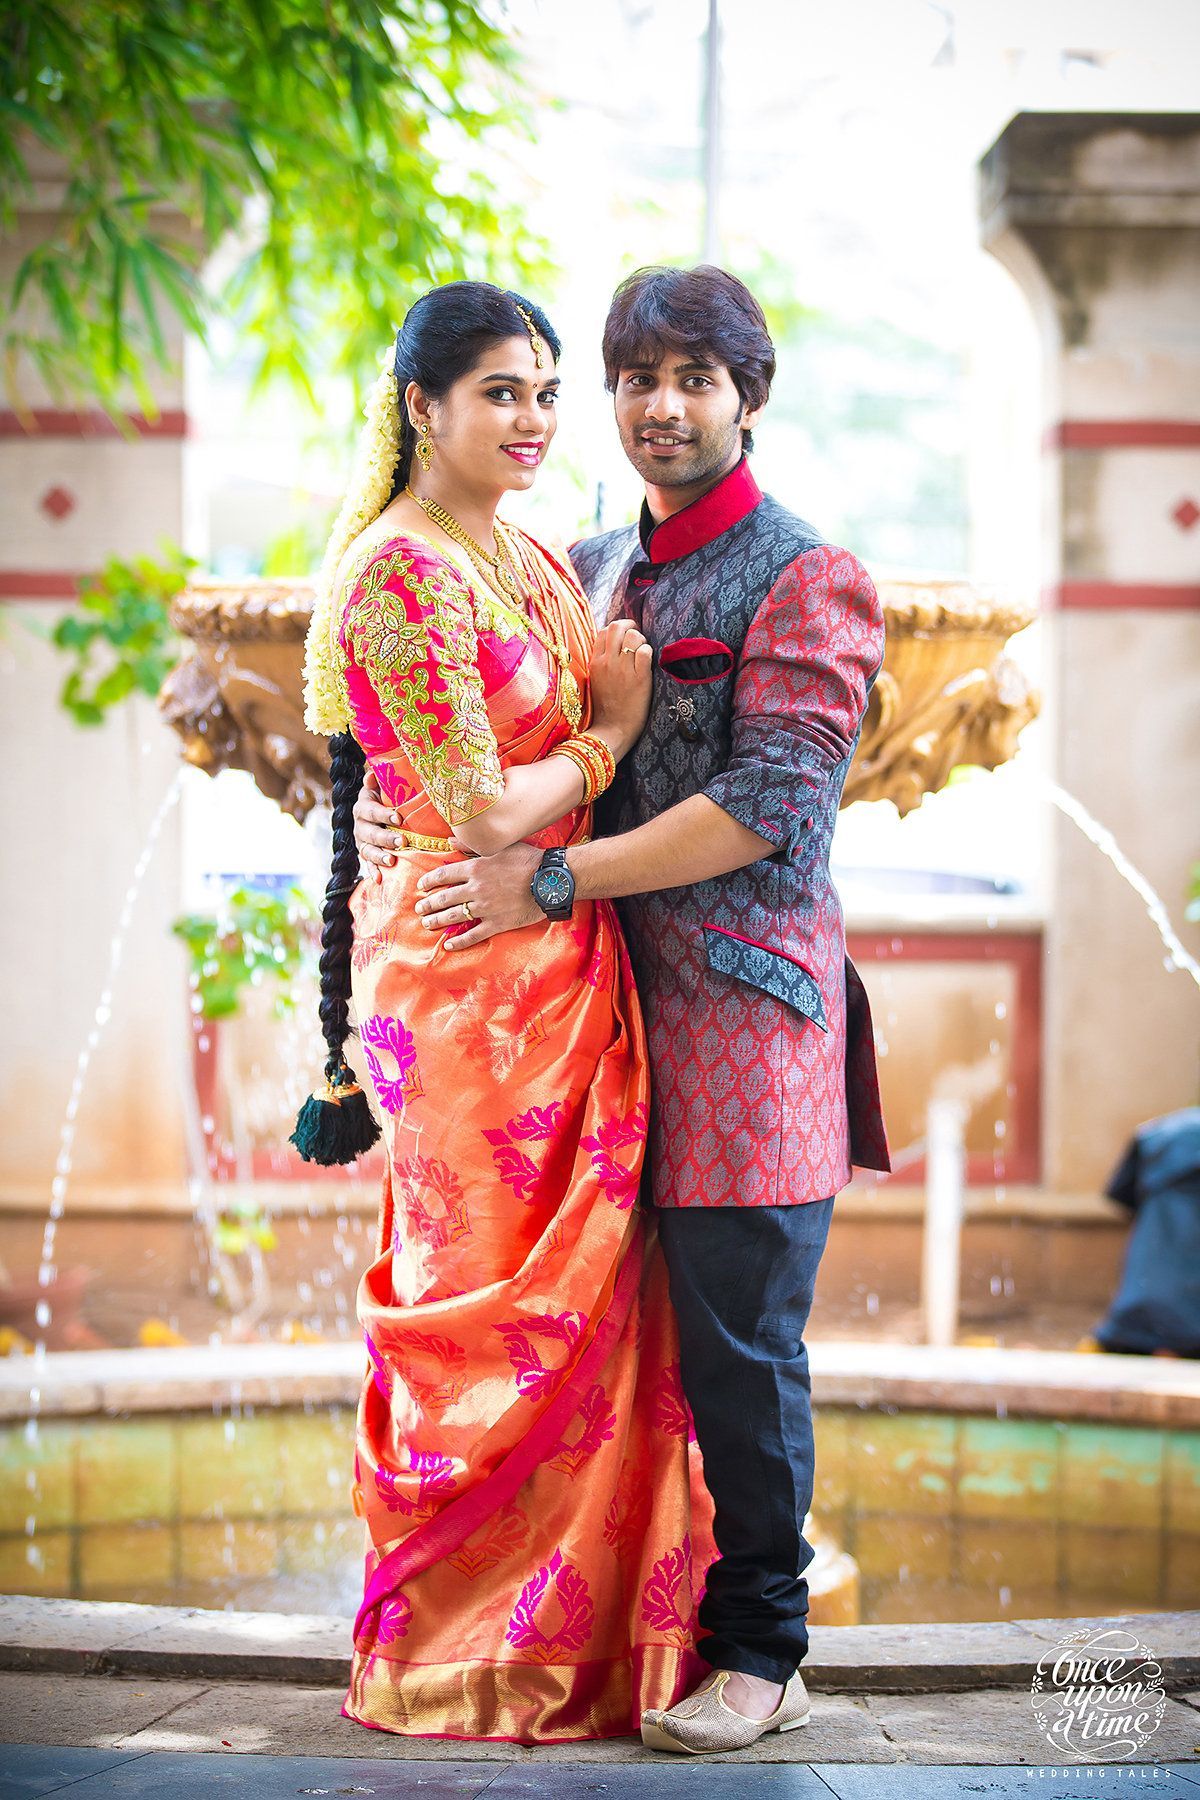 Indian wedding photography poses .com